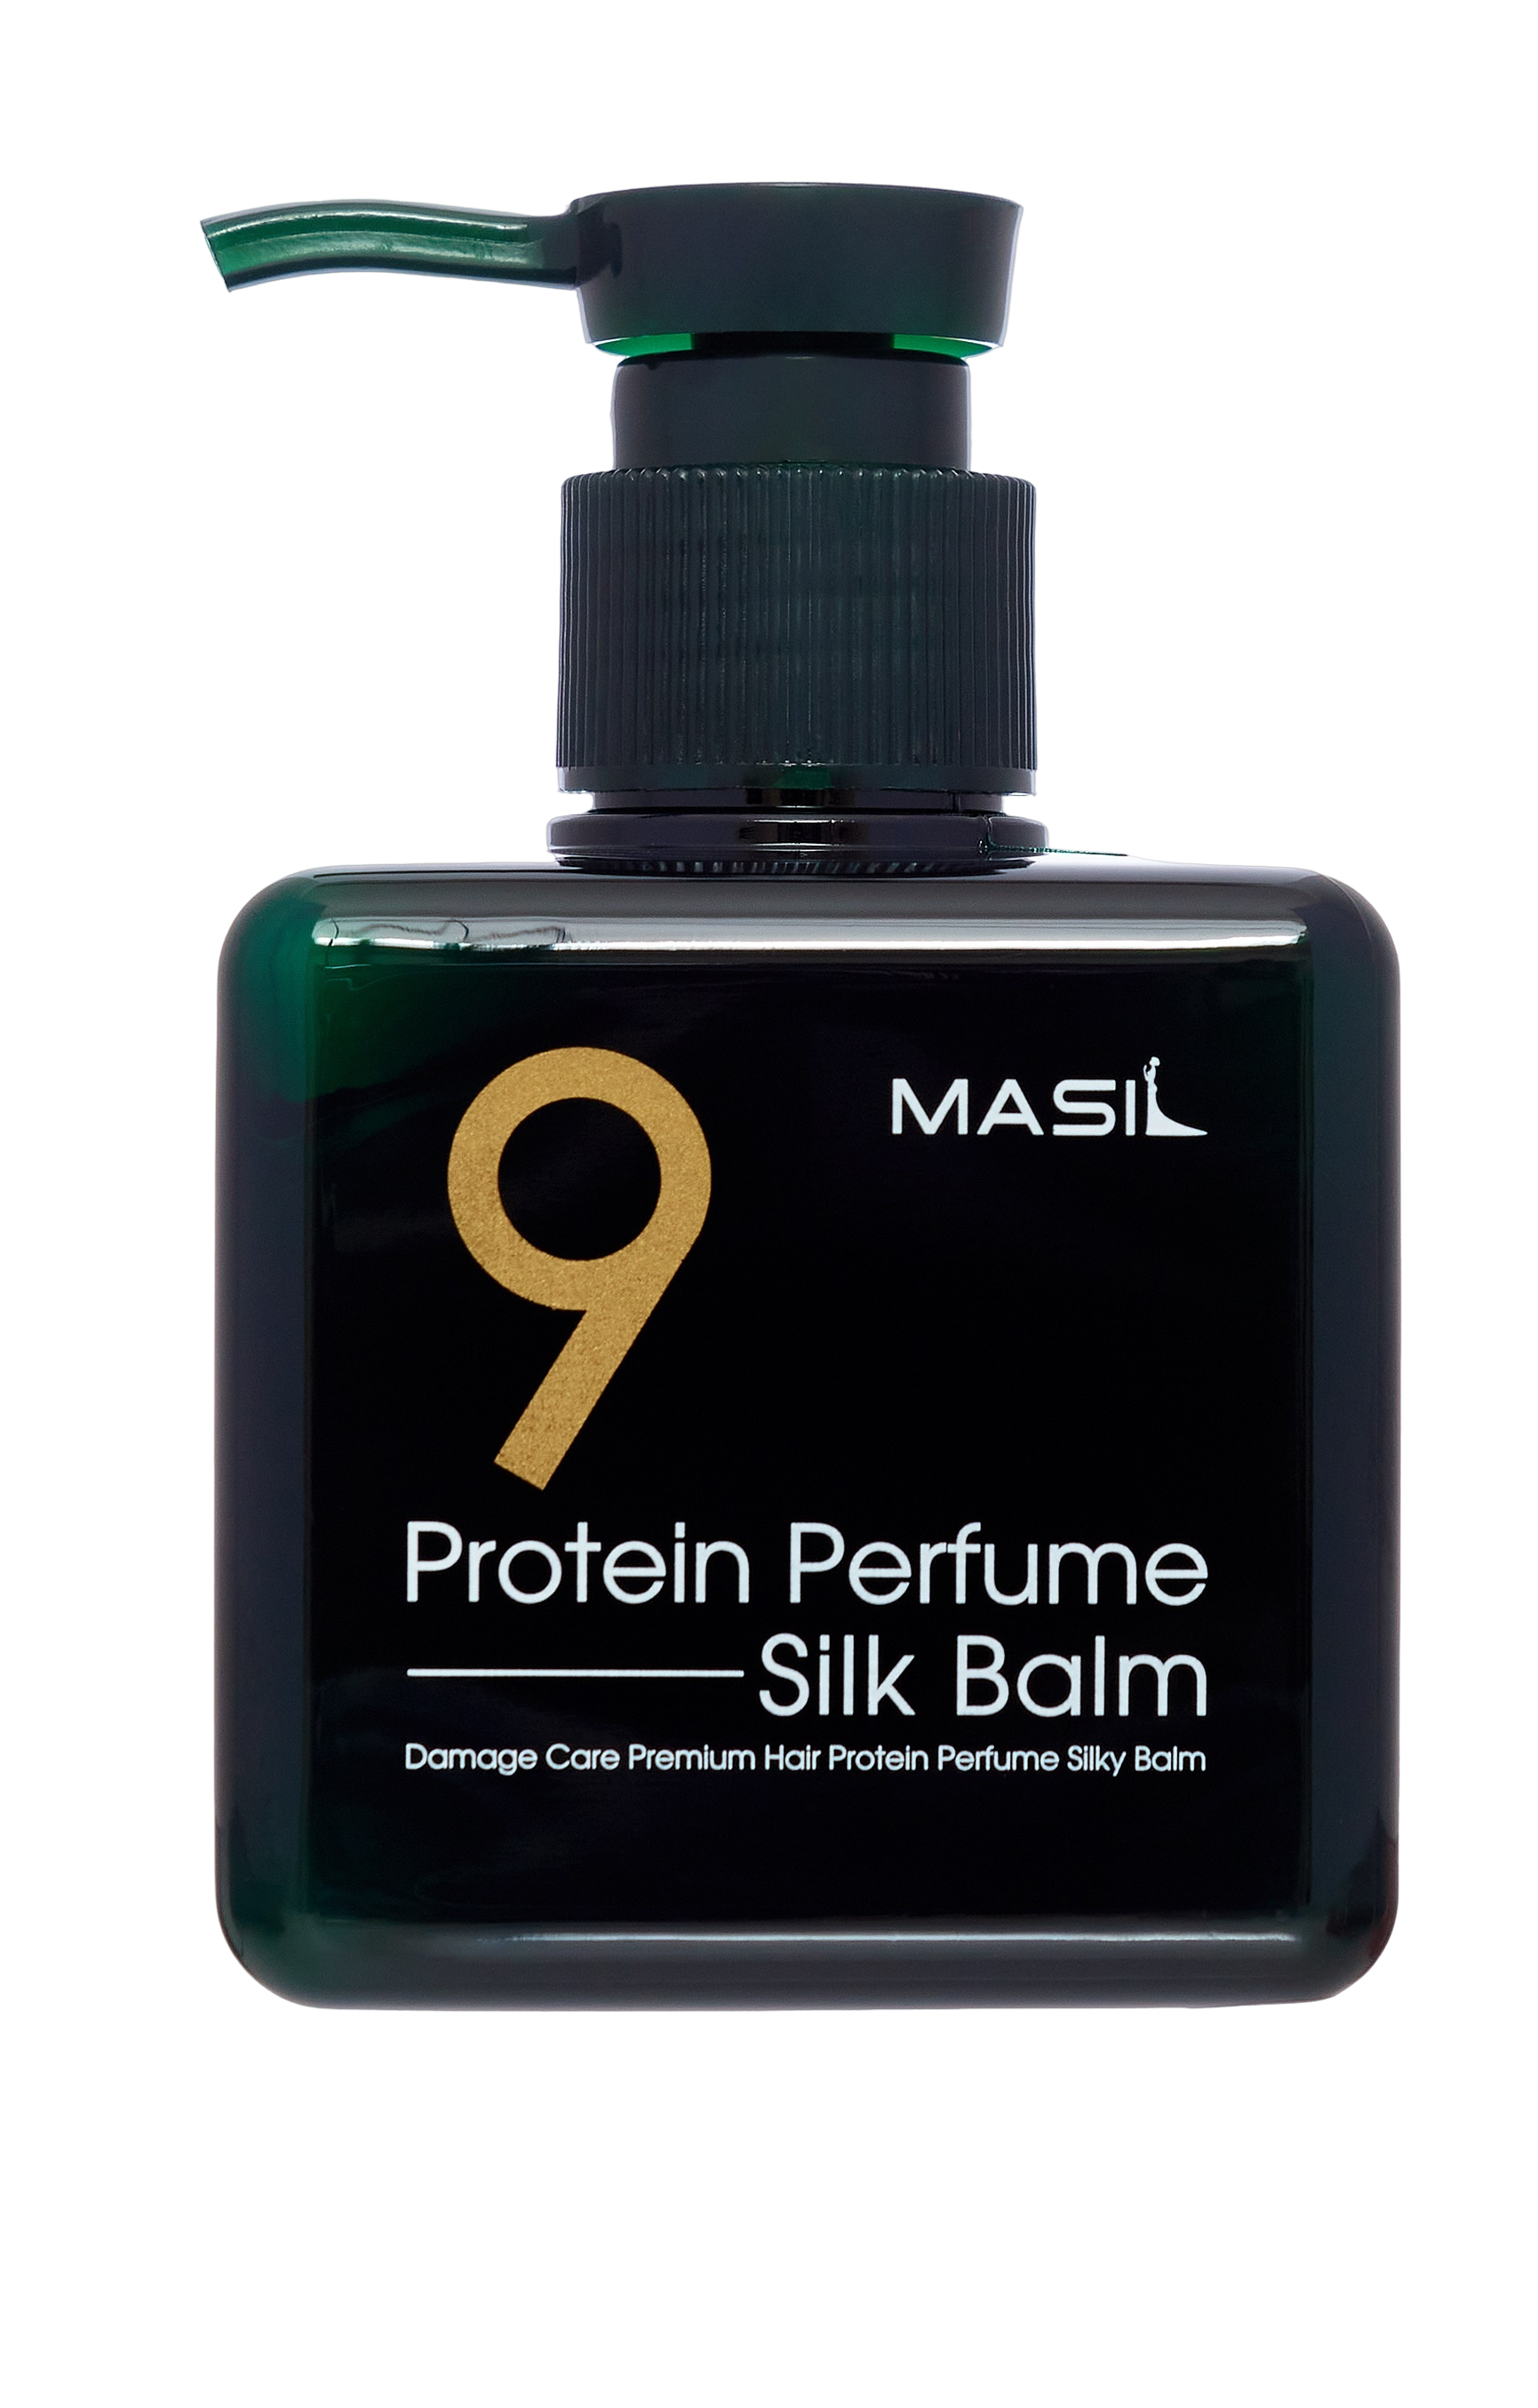 Бальзам протеин. 9 Protein Perfume Silk Balm. Masil 9 Protein Perfume Silk Balm Sweet Love 20 мл. Novo Egyptian Silk Balm.